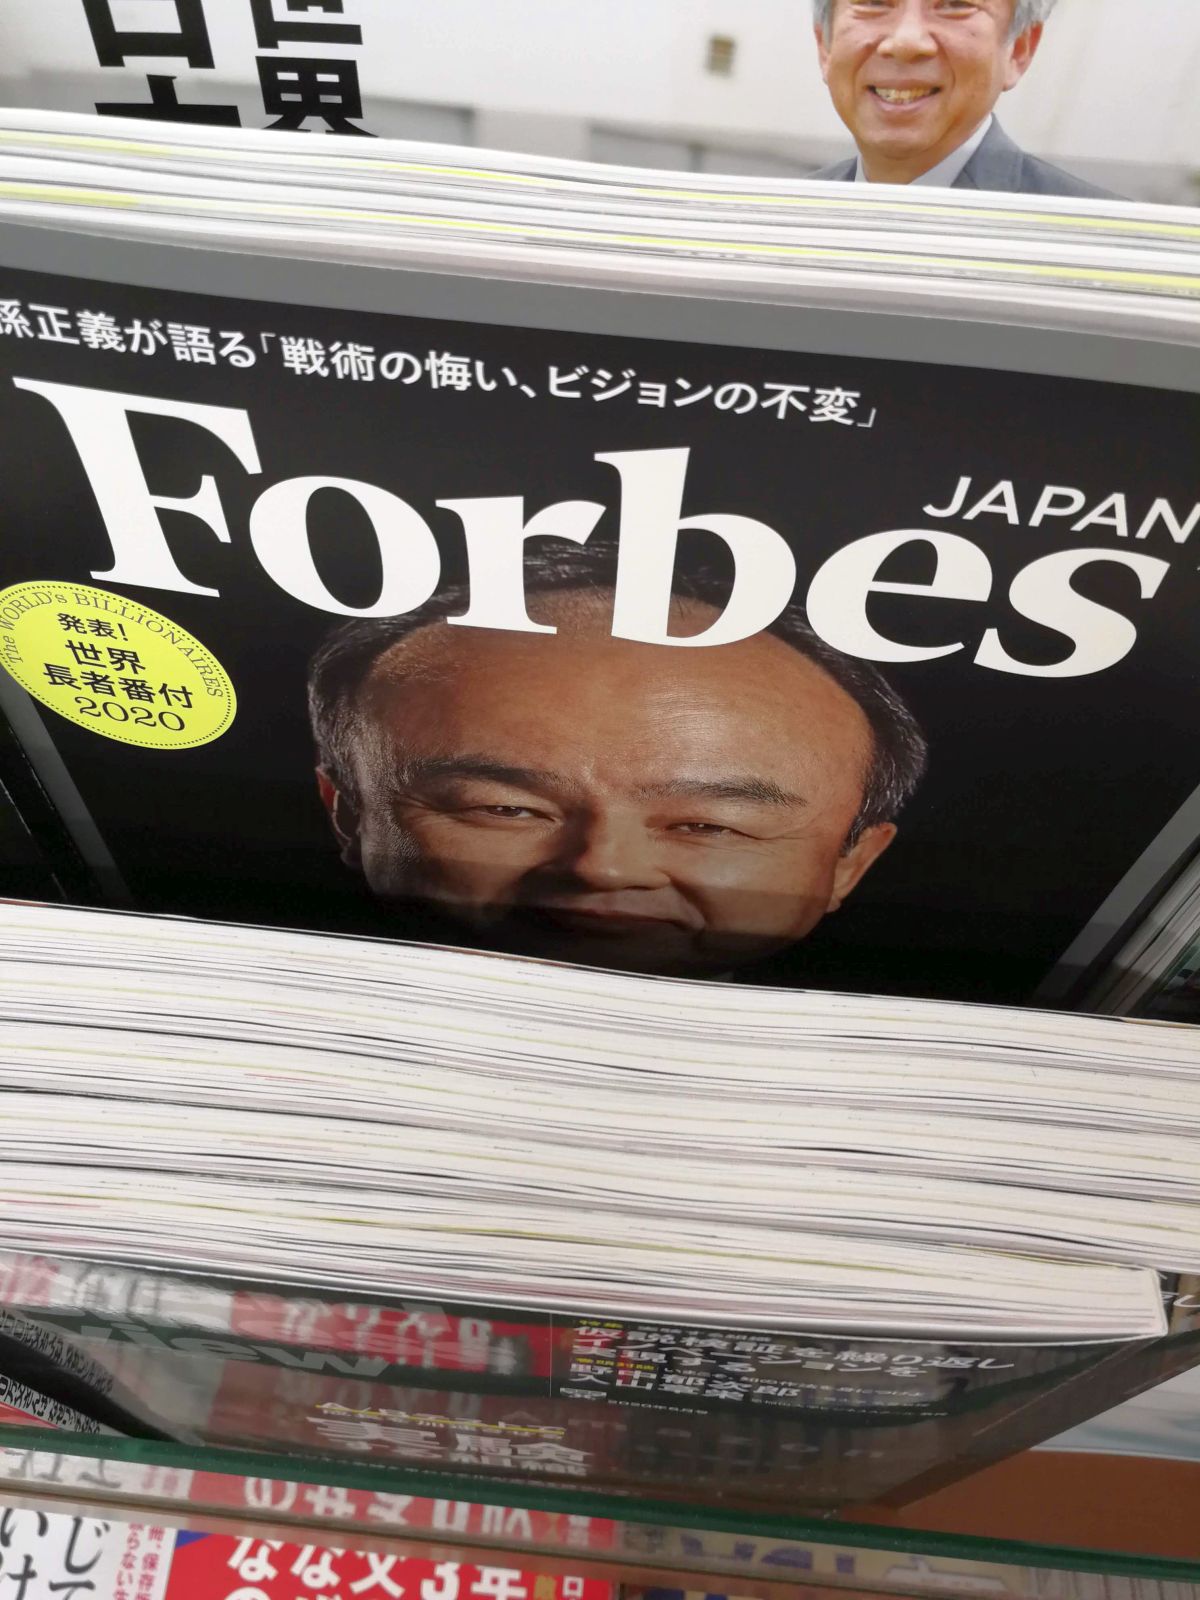 Forbesの表紙